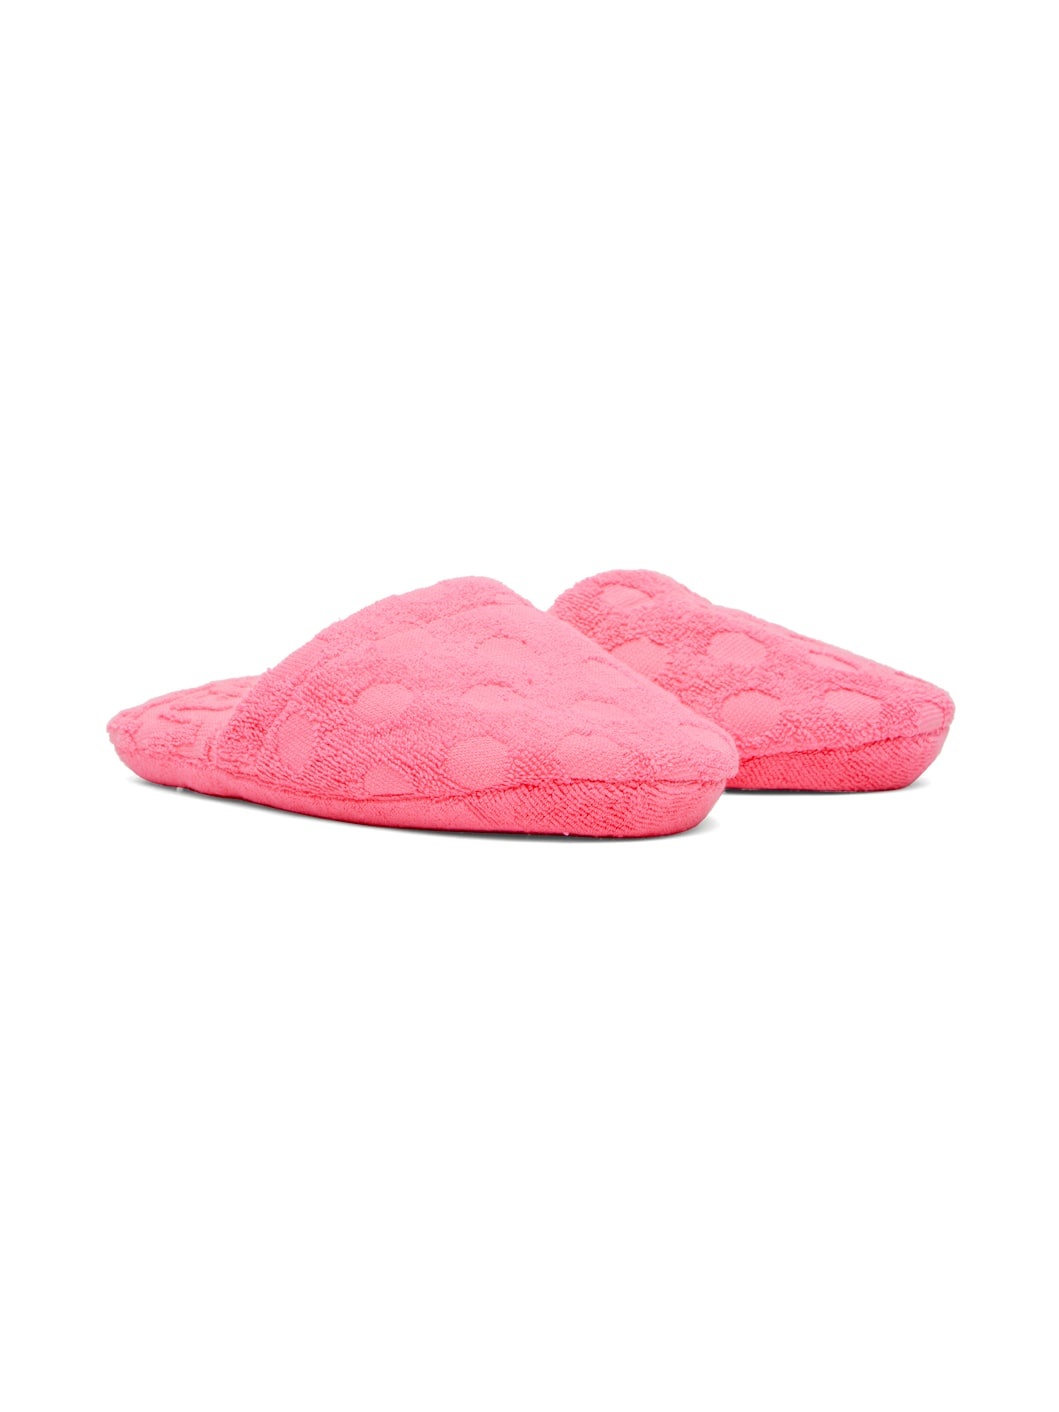 Pink Polka Dot Slippers - 4